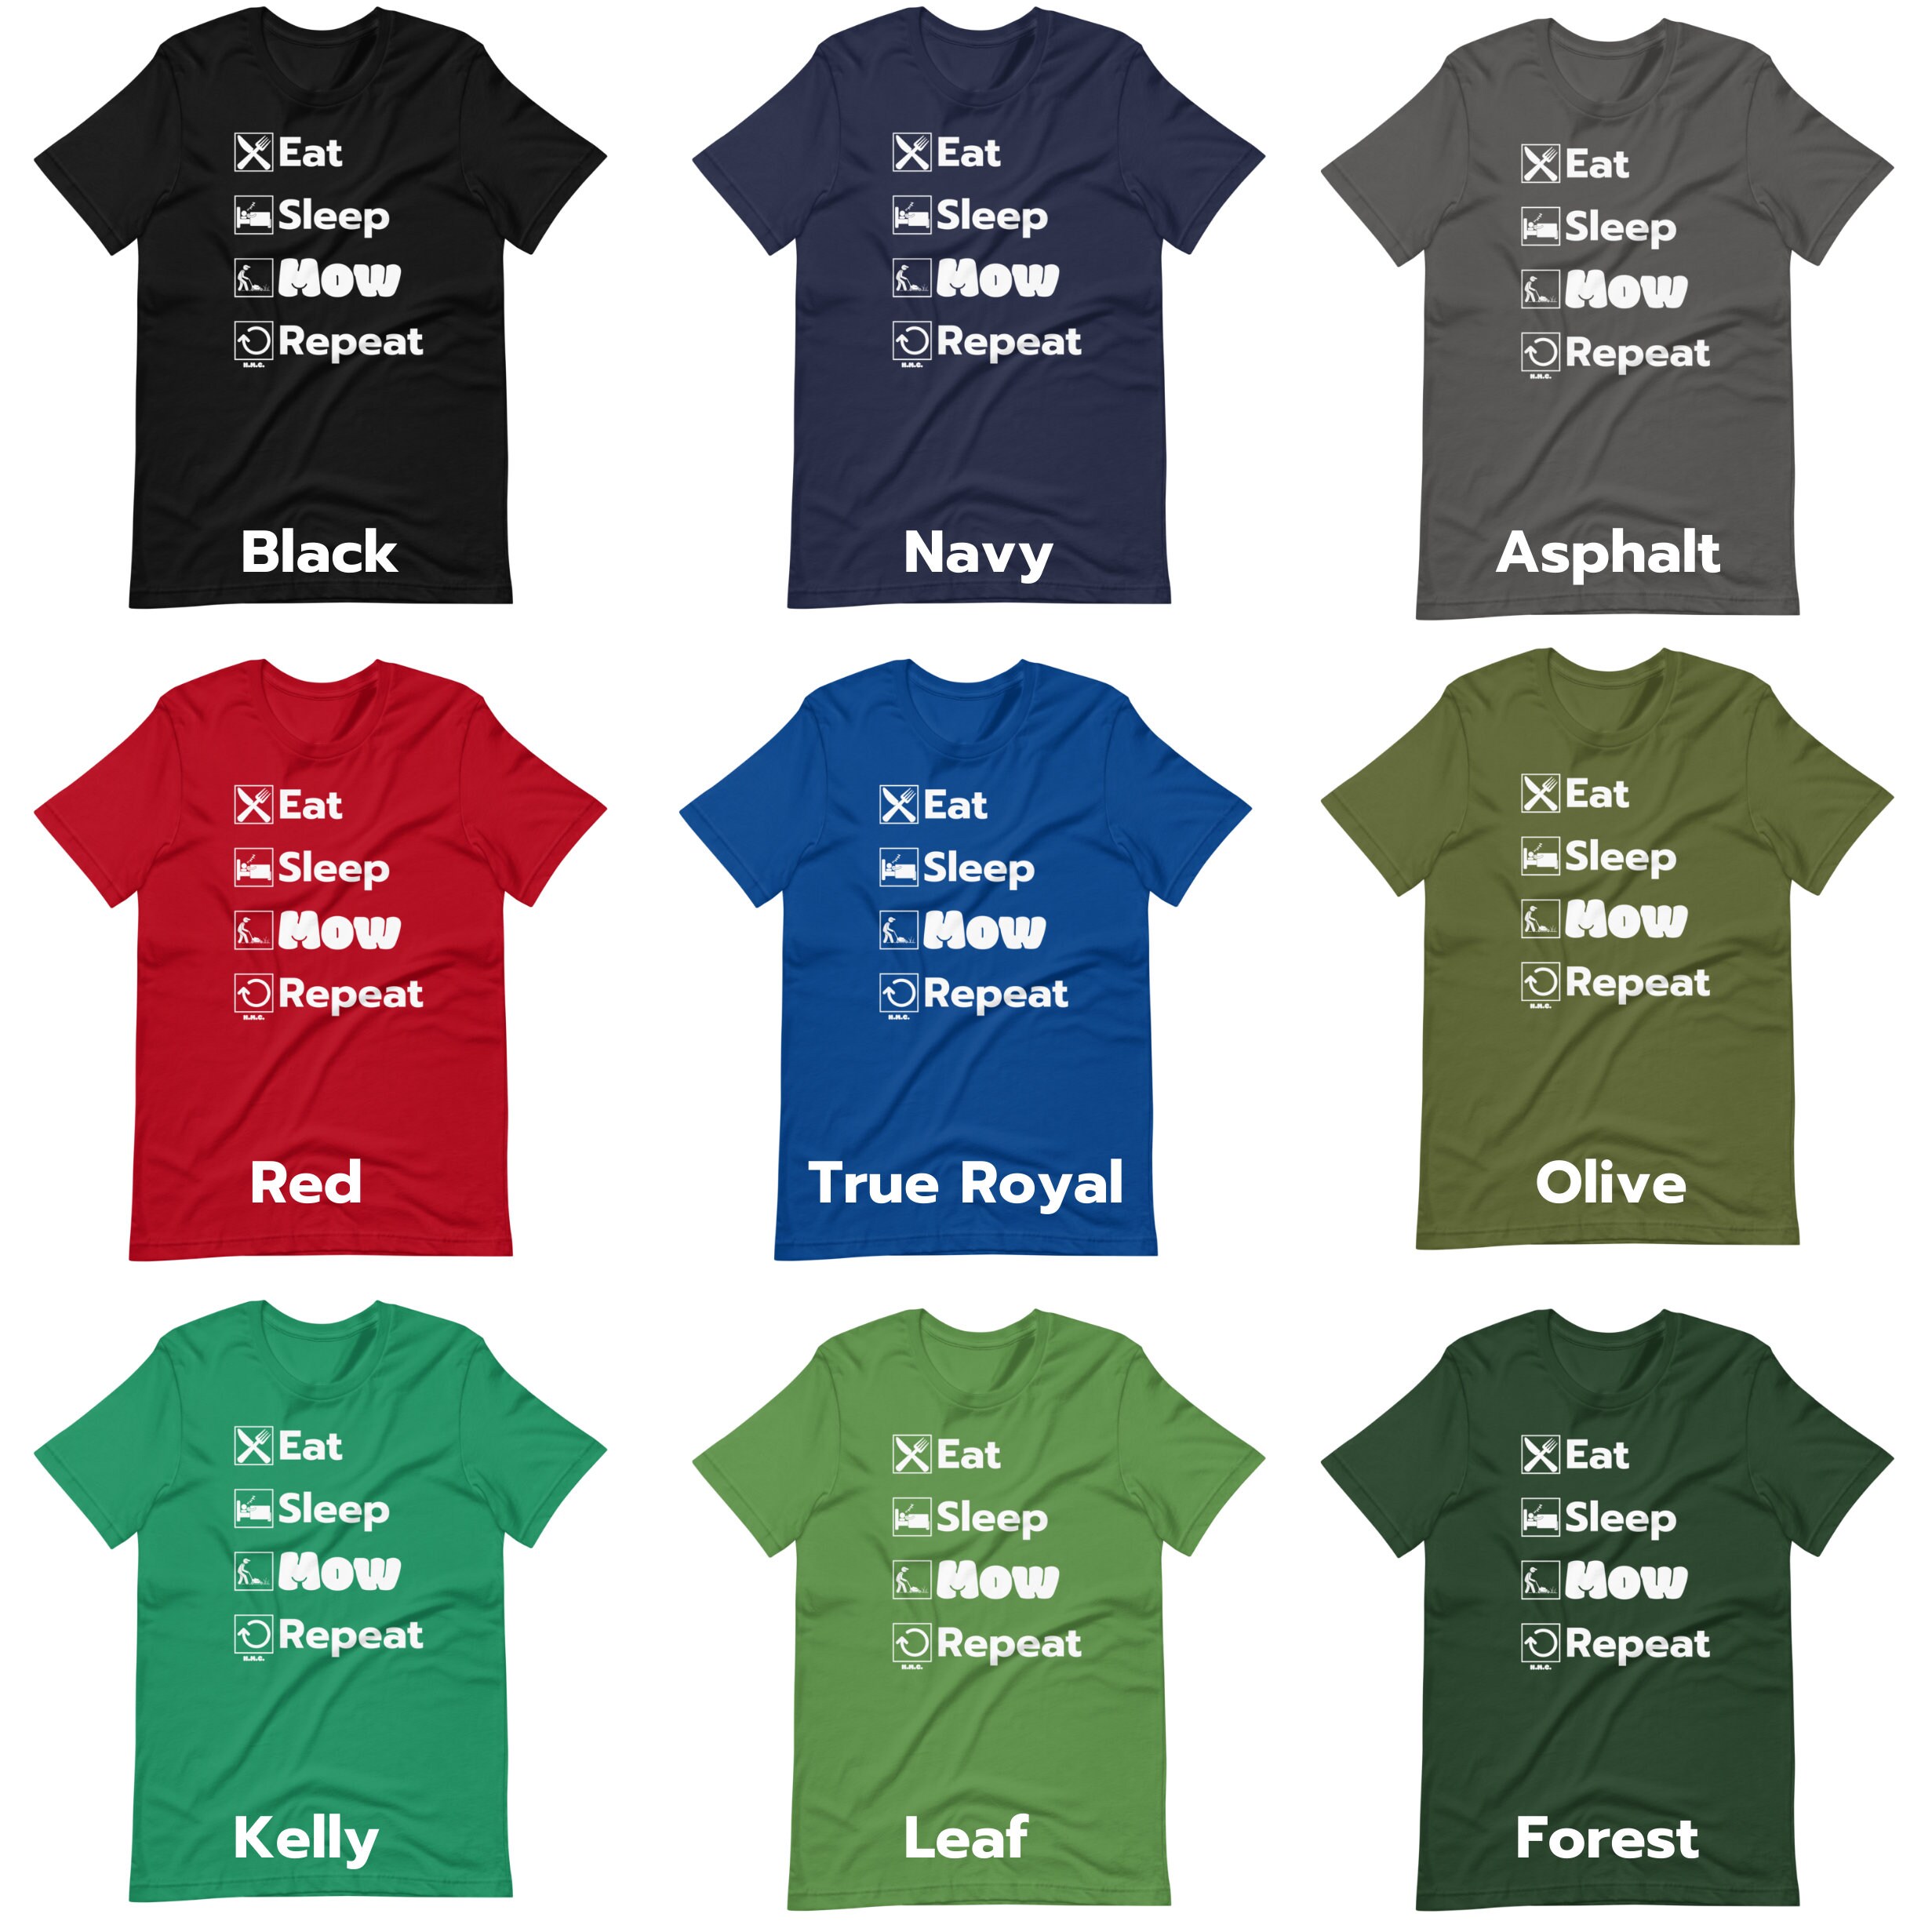 Eat Sleep Mow Repeat T-Shirt: Lawn, Grass, Mower, Lawn Care, Lawn Mower Shirt